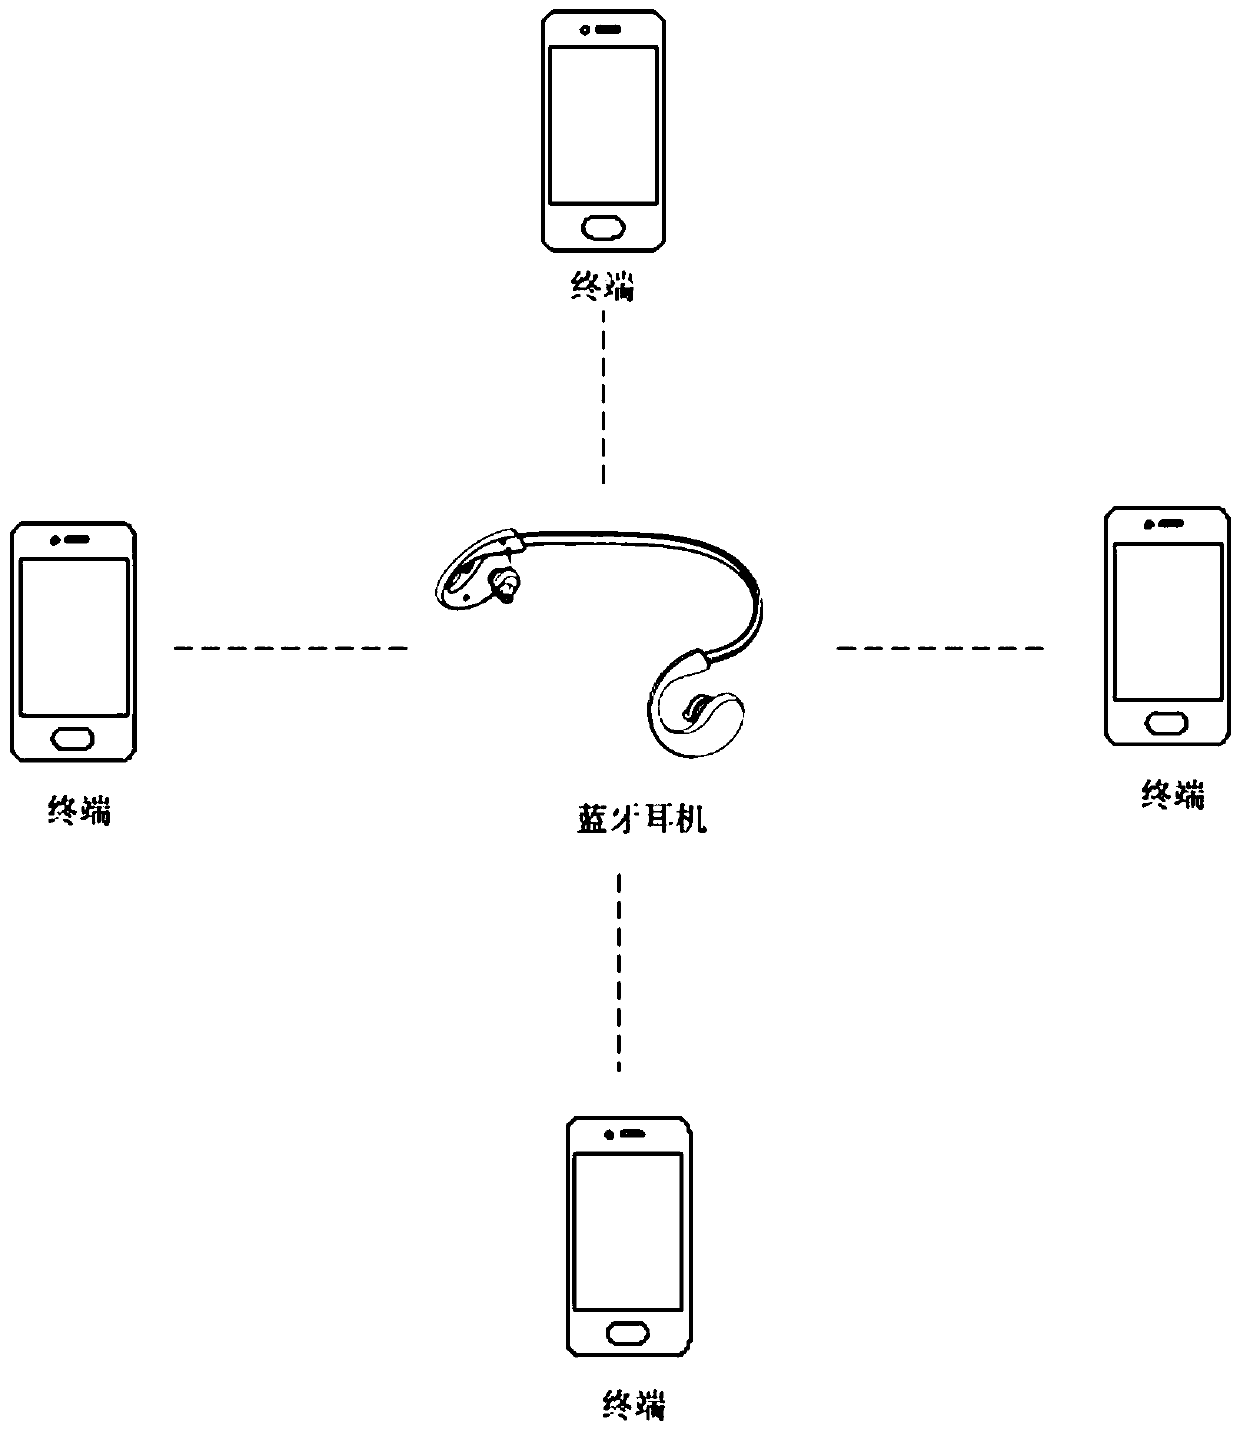 Bluetooth earphone switching method, Bluetooth earphone and terminal